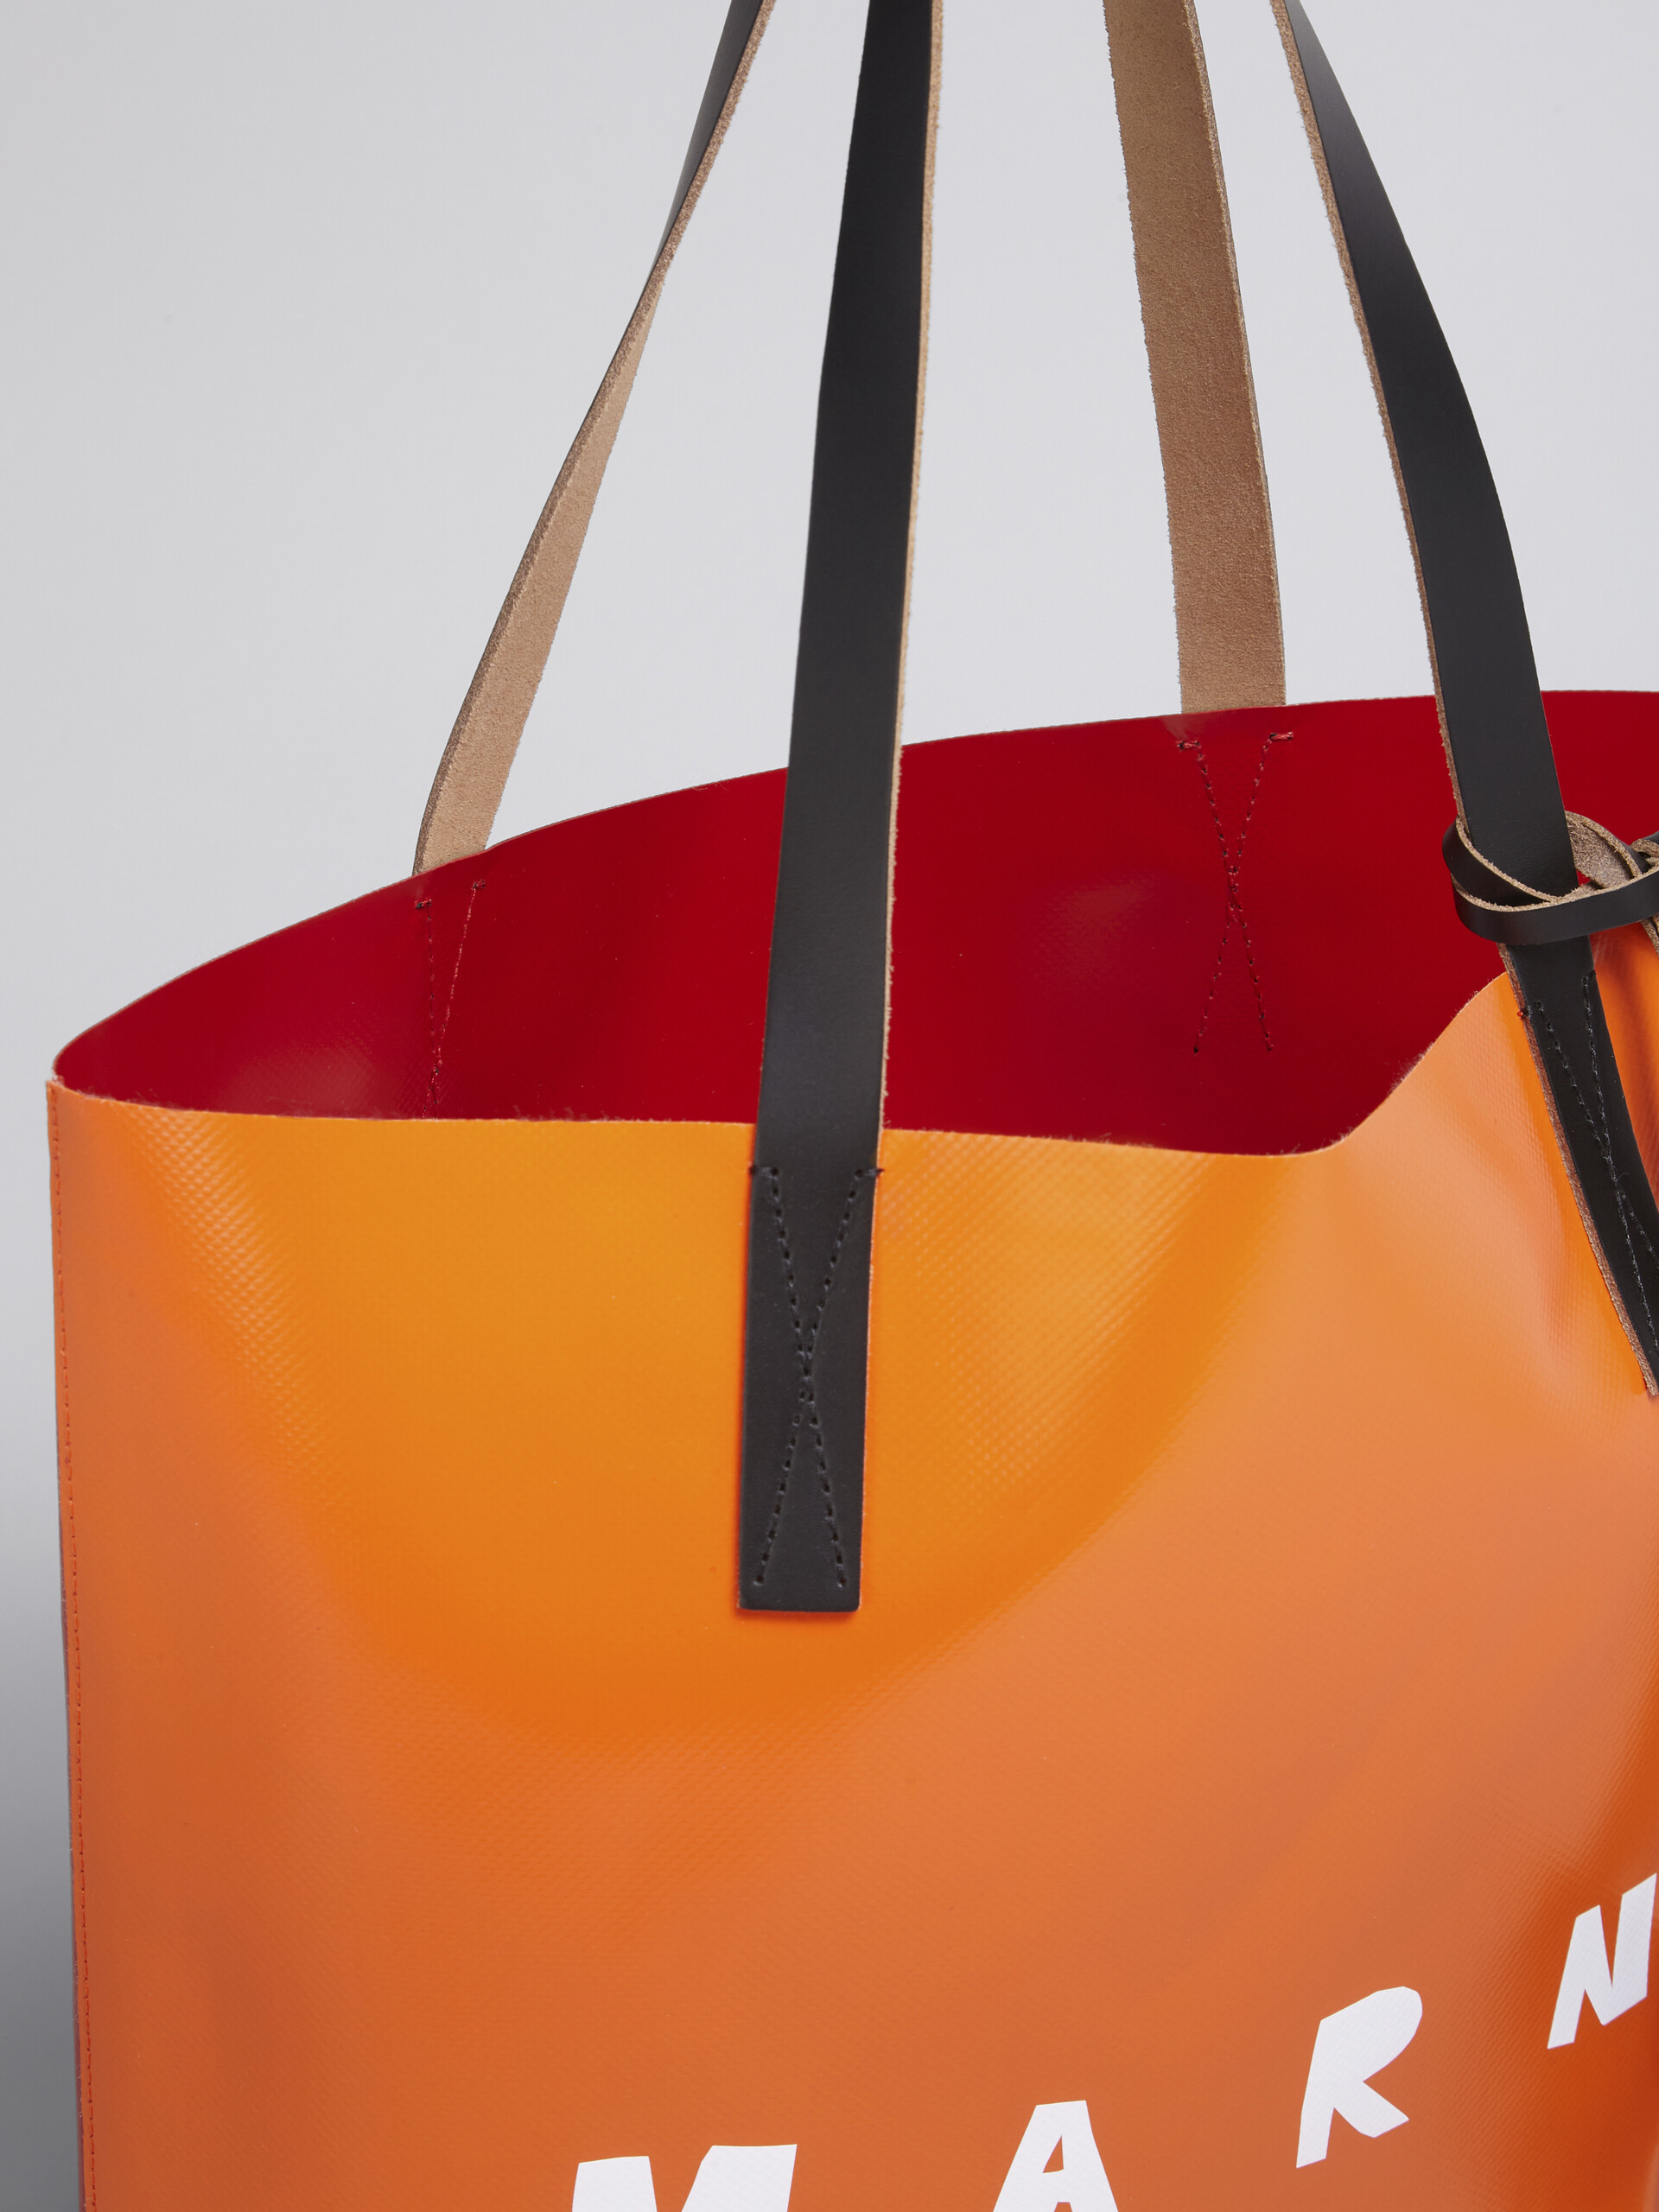 Borsa shopping in PVC con manici in pelle e logo Marni fuxia e arancione - Borse shopping - Image 2